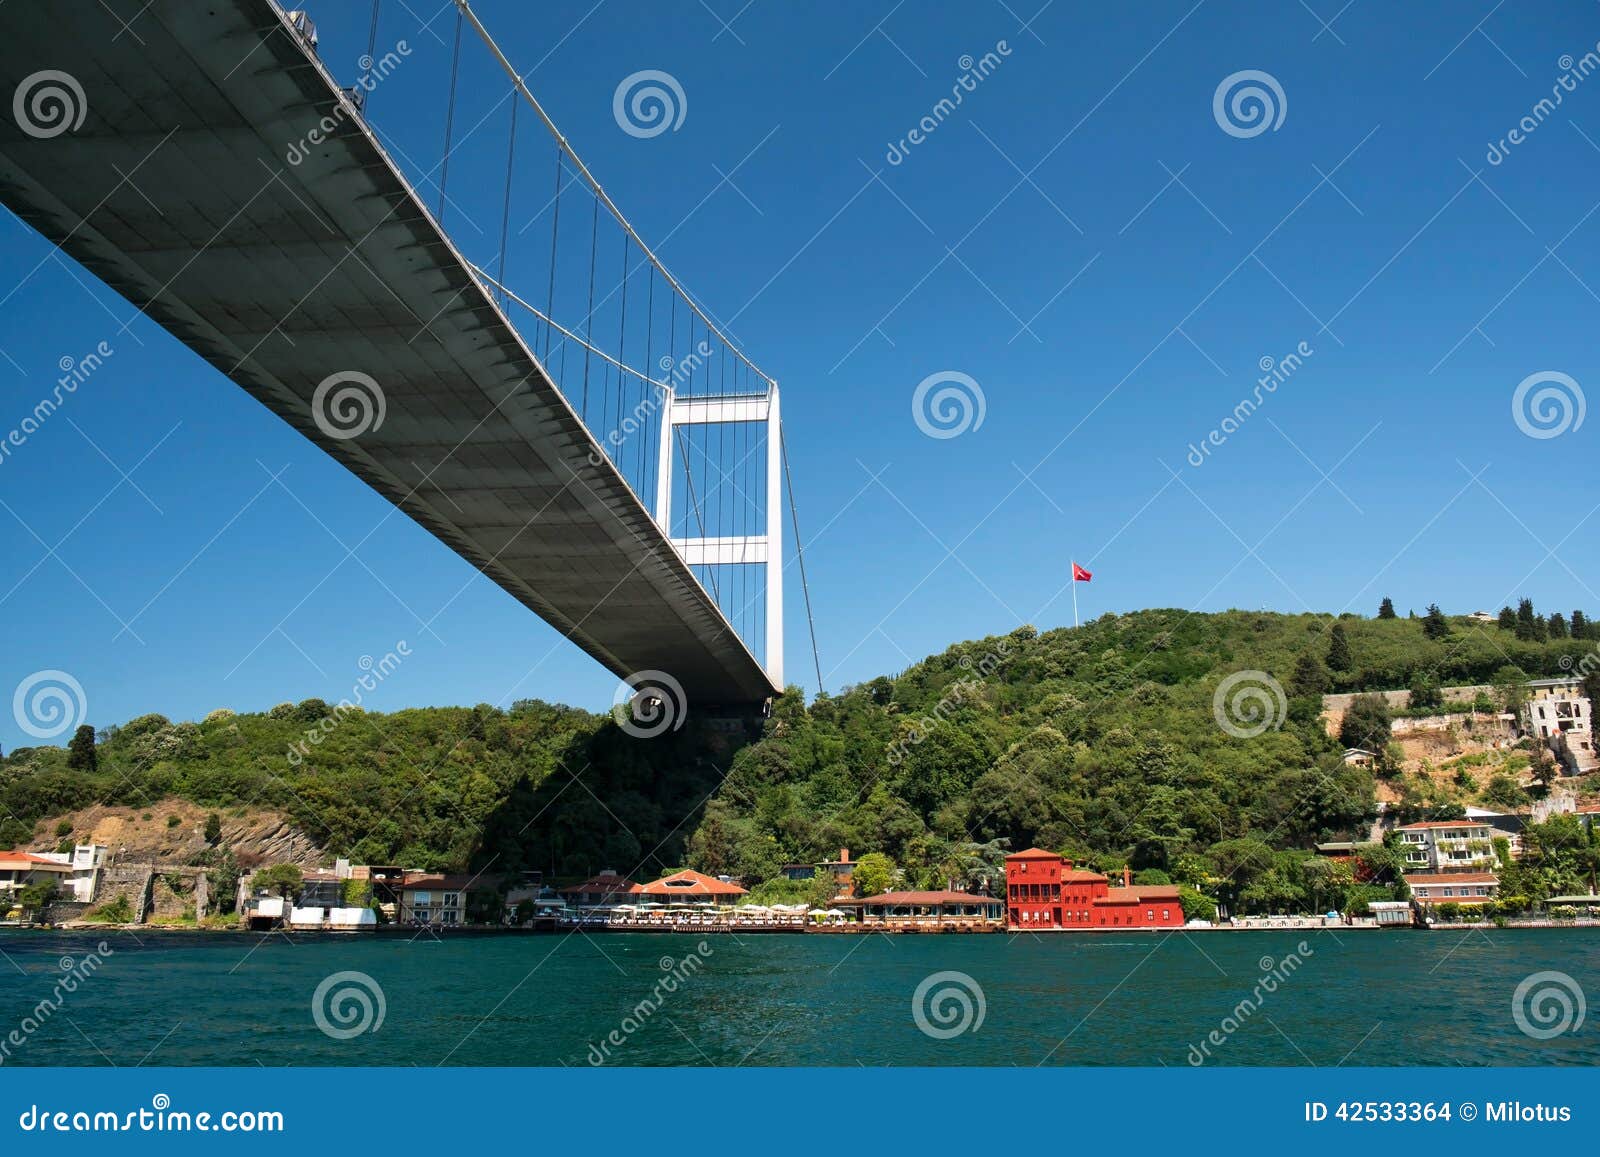 fatih sultan mehmed bridge